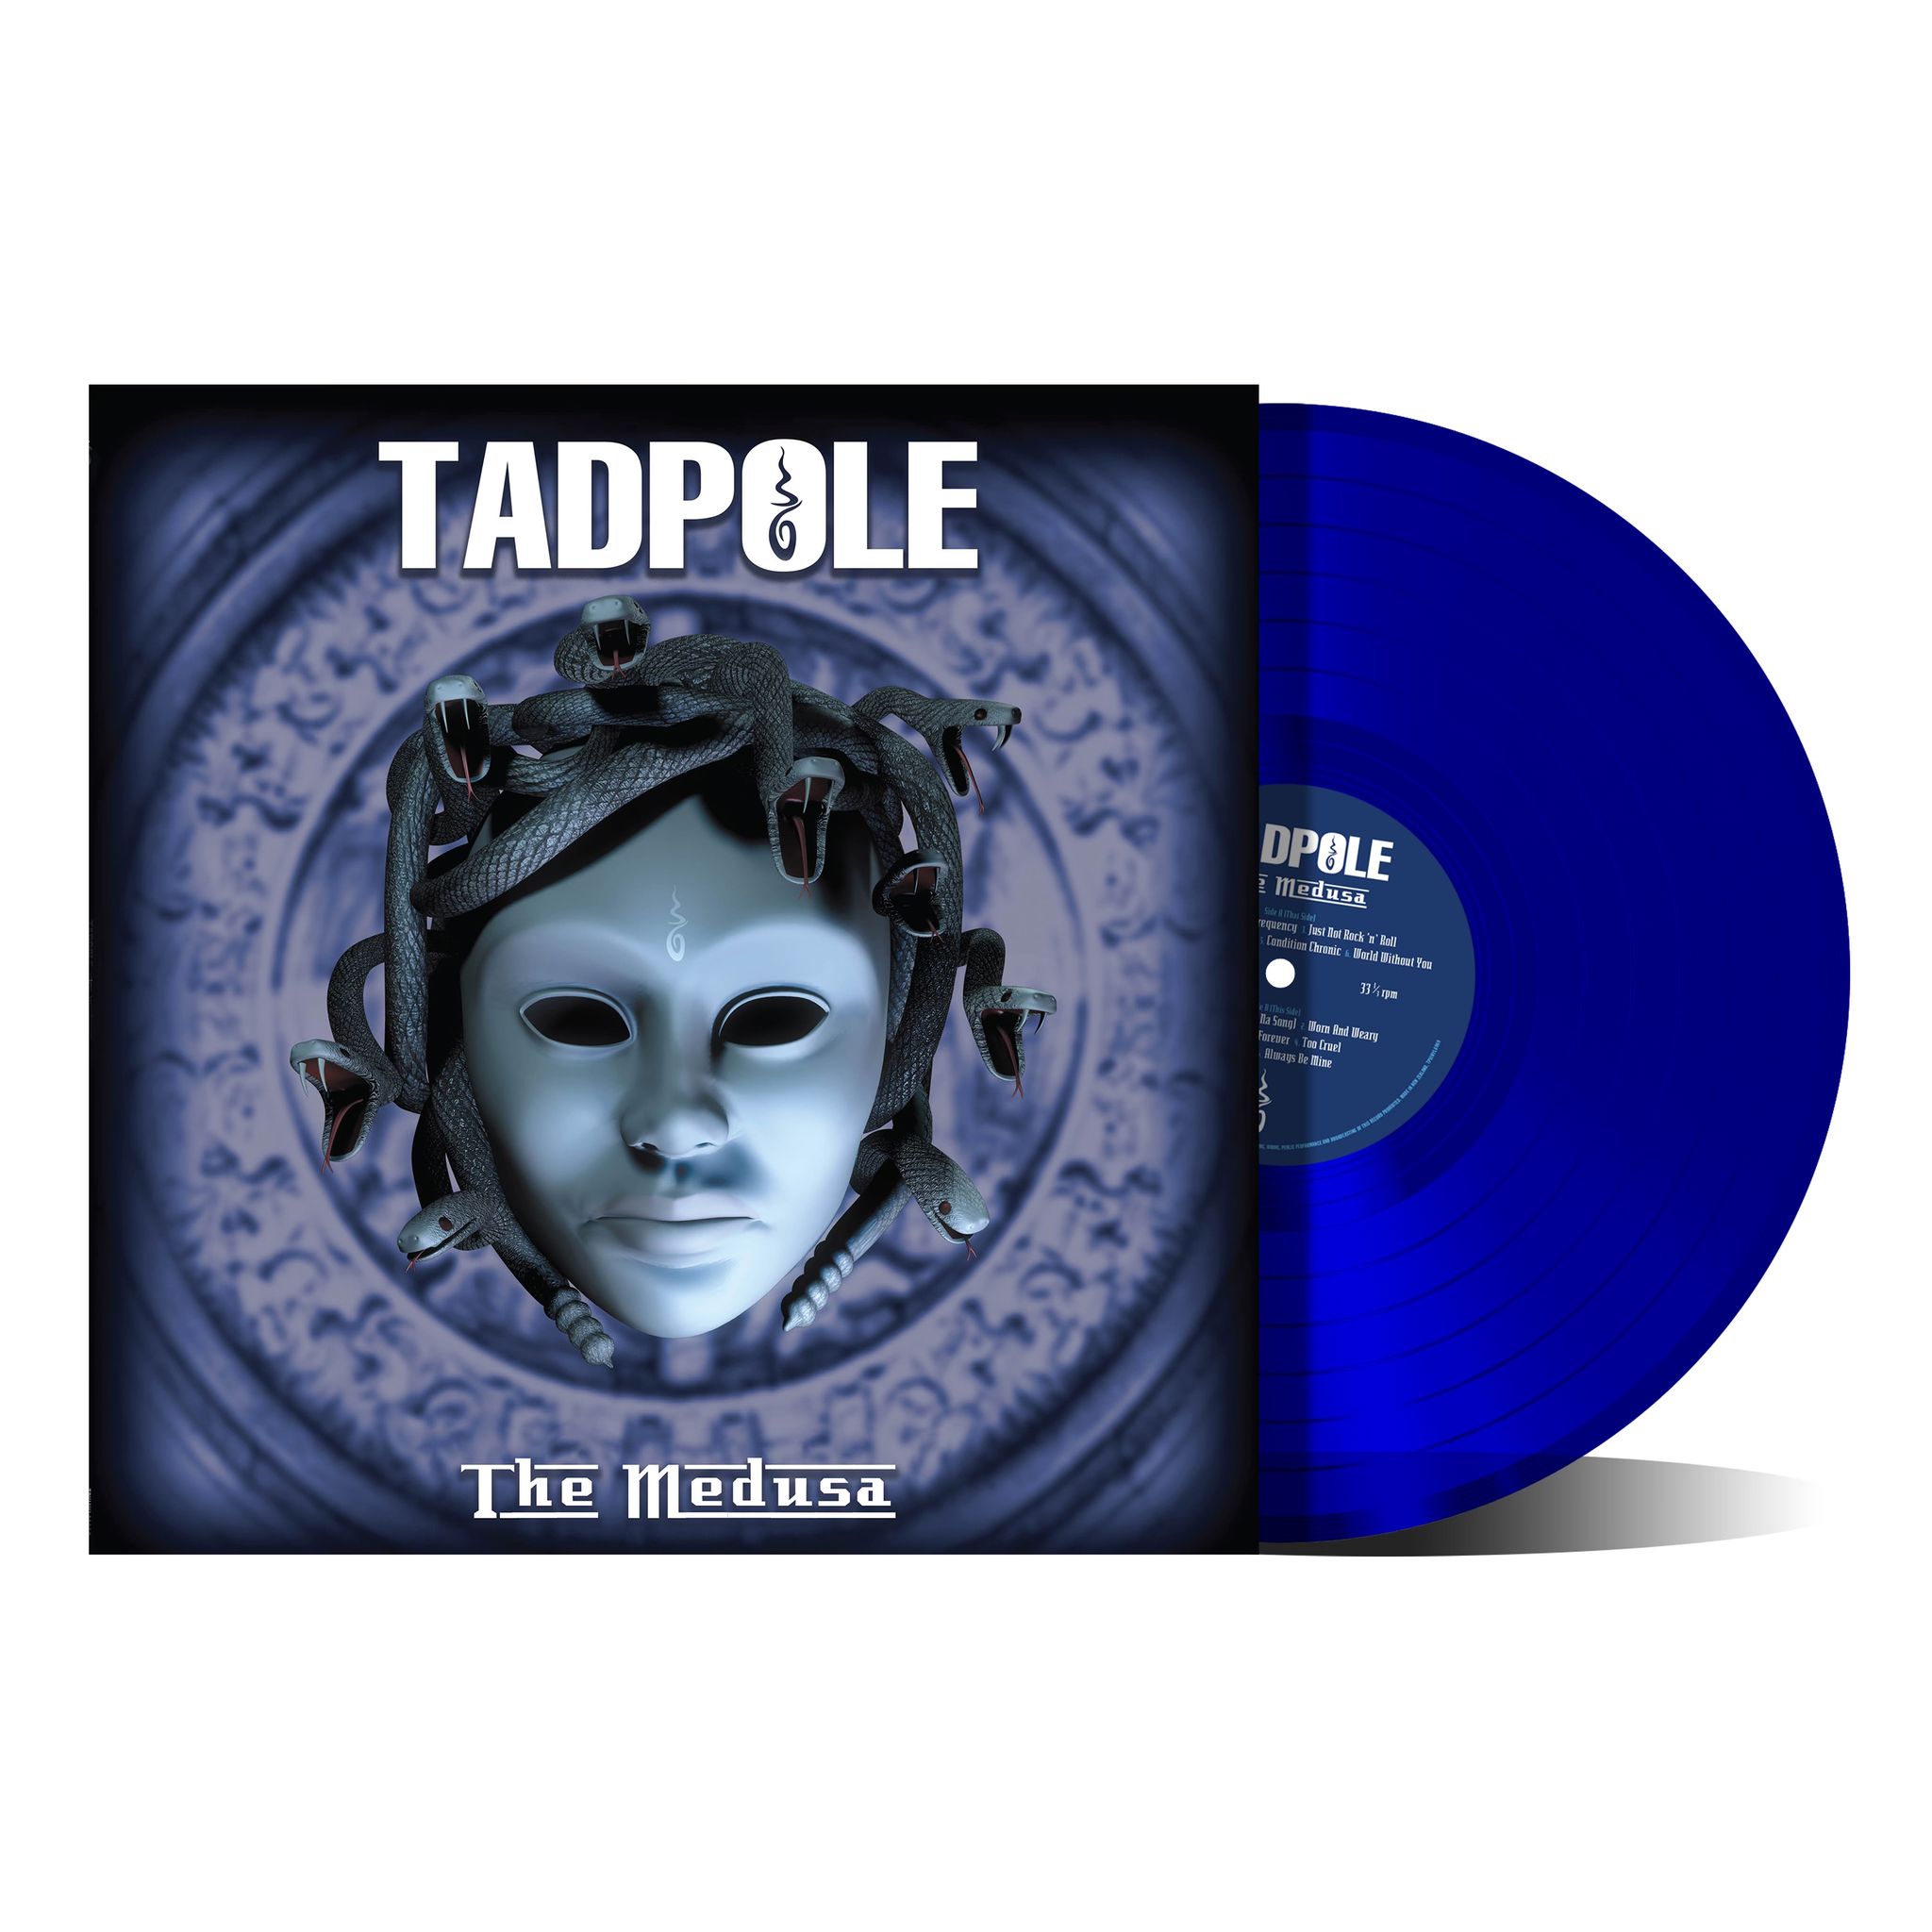 TADPOLE - THE MEDUSA LIMITED BLUE LP.